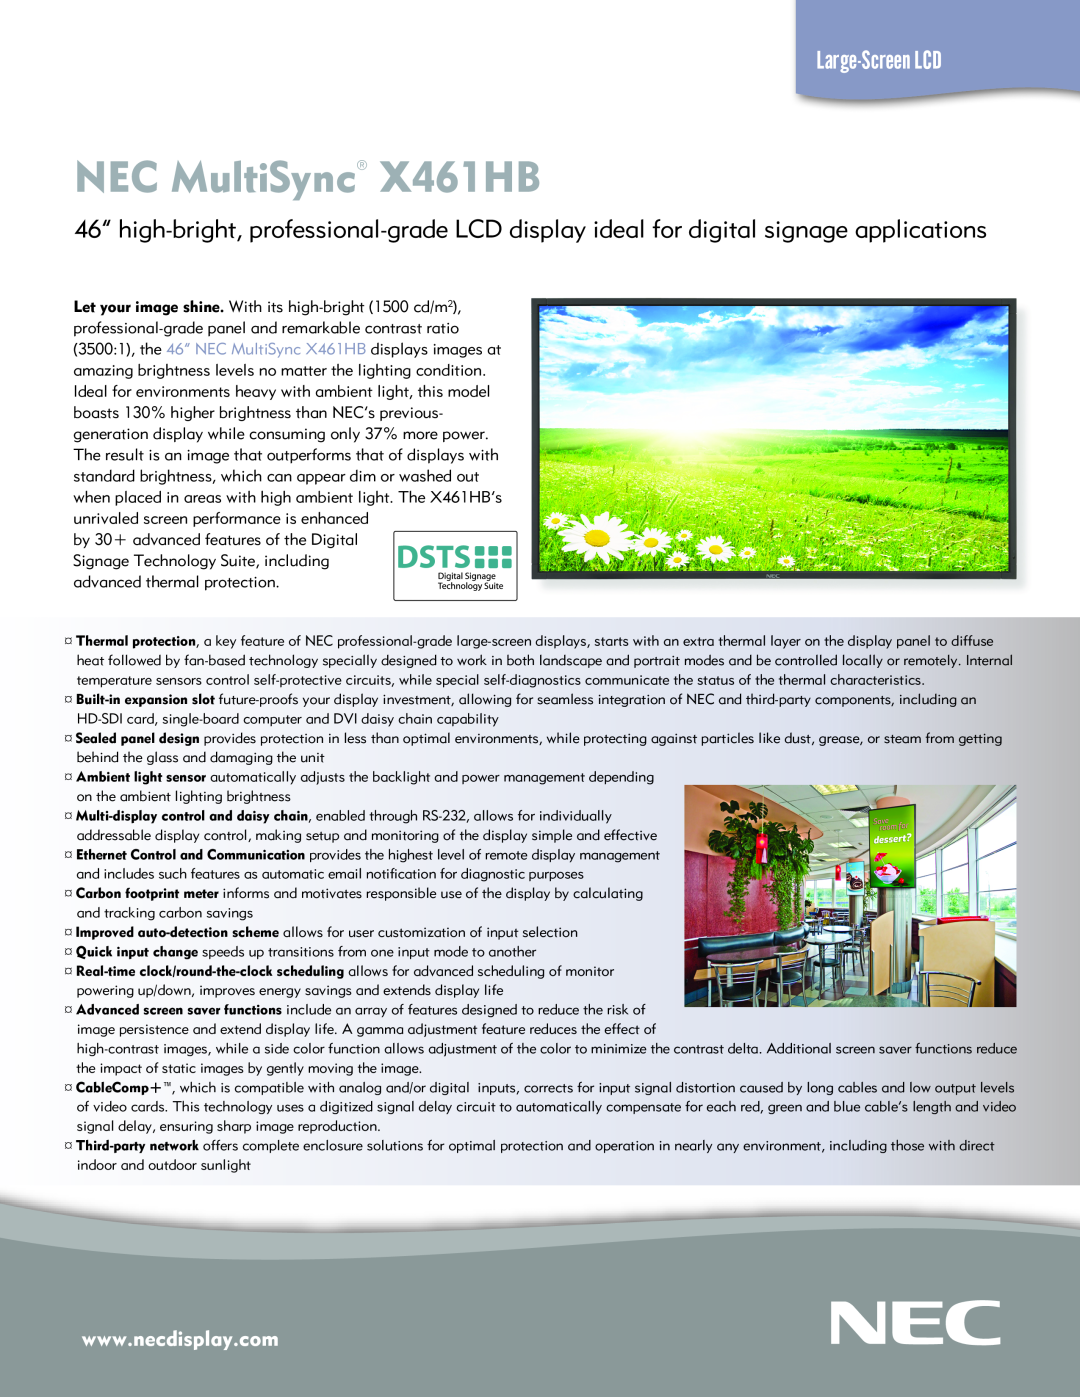 NEC manual NEC MultiSync X461HB, Large-Screen LCD 